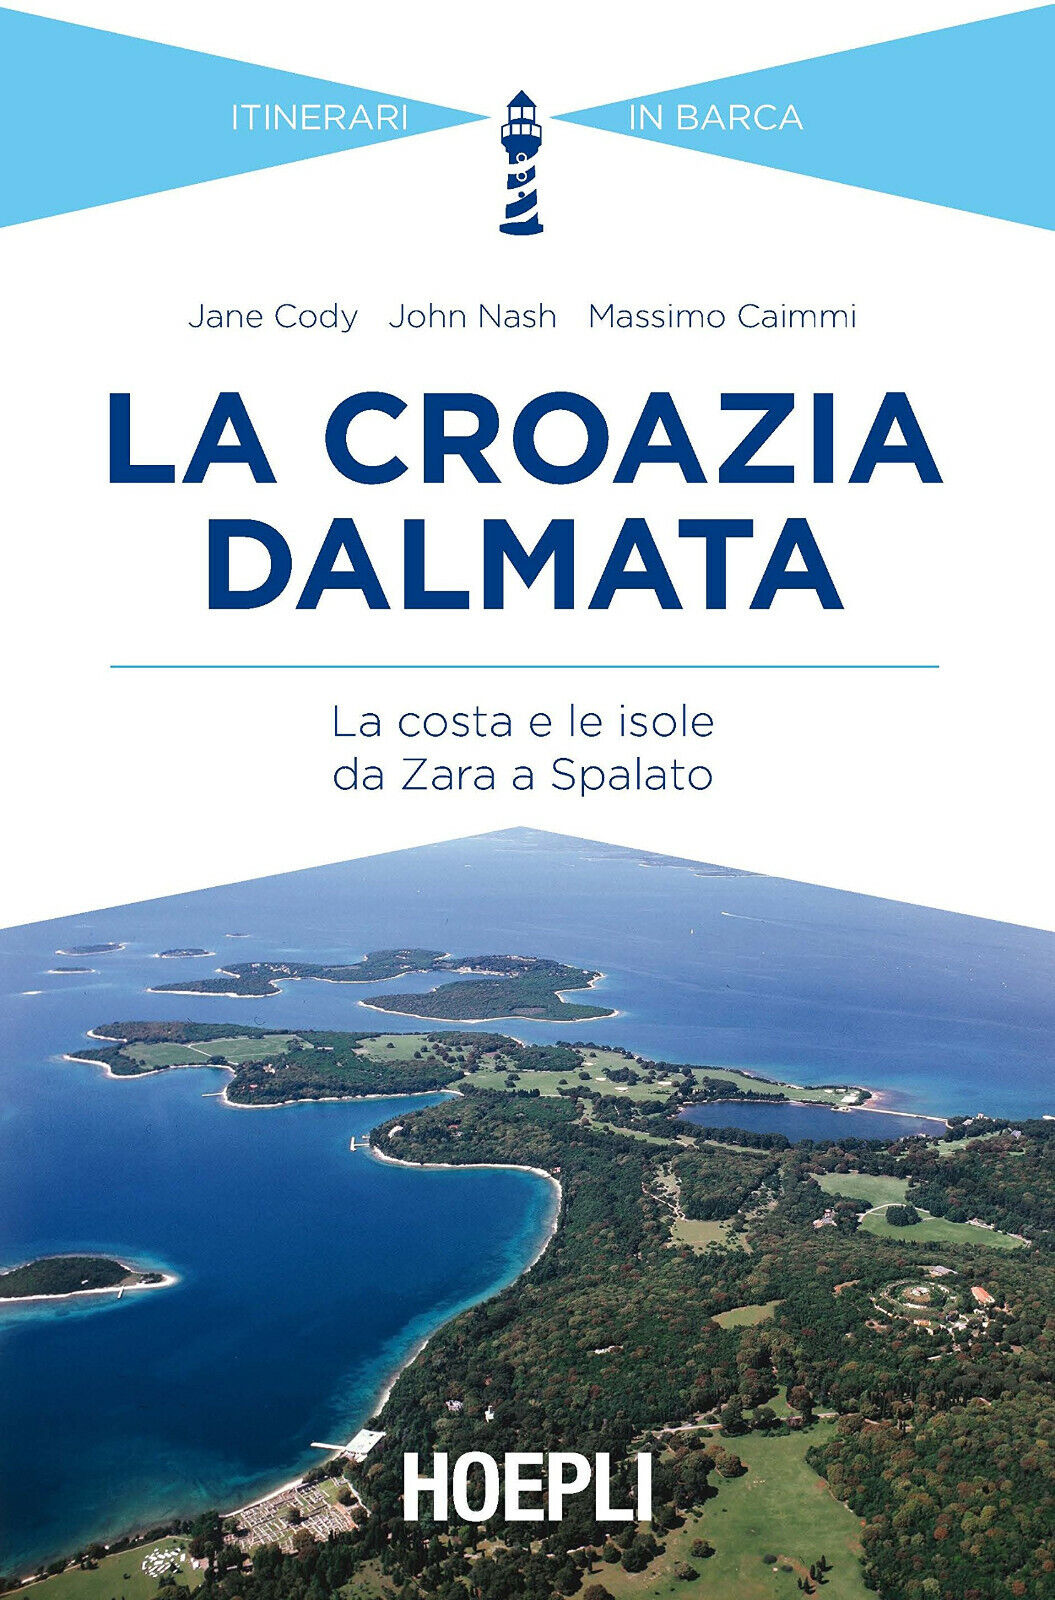 La Croazia dalmata - Jane Cody, John Nash, Massimo Caimmi - Hoepli, 2015